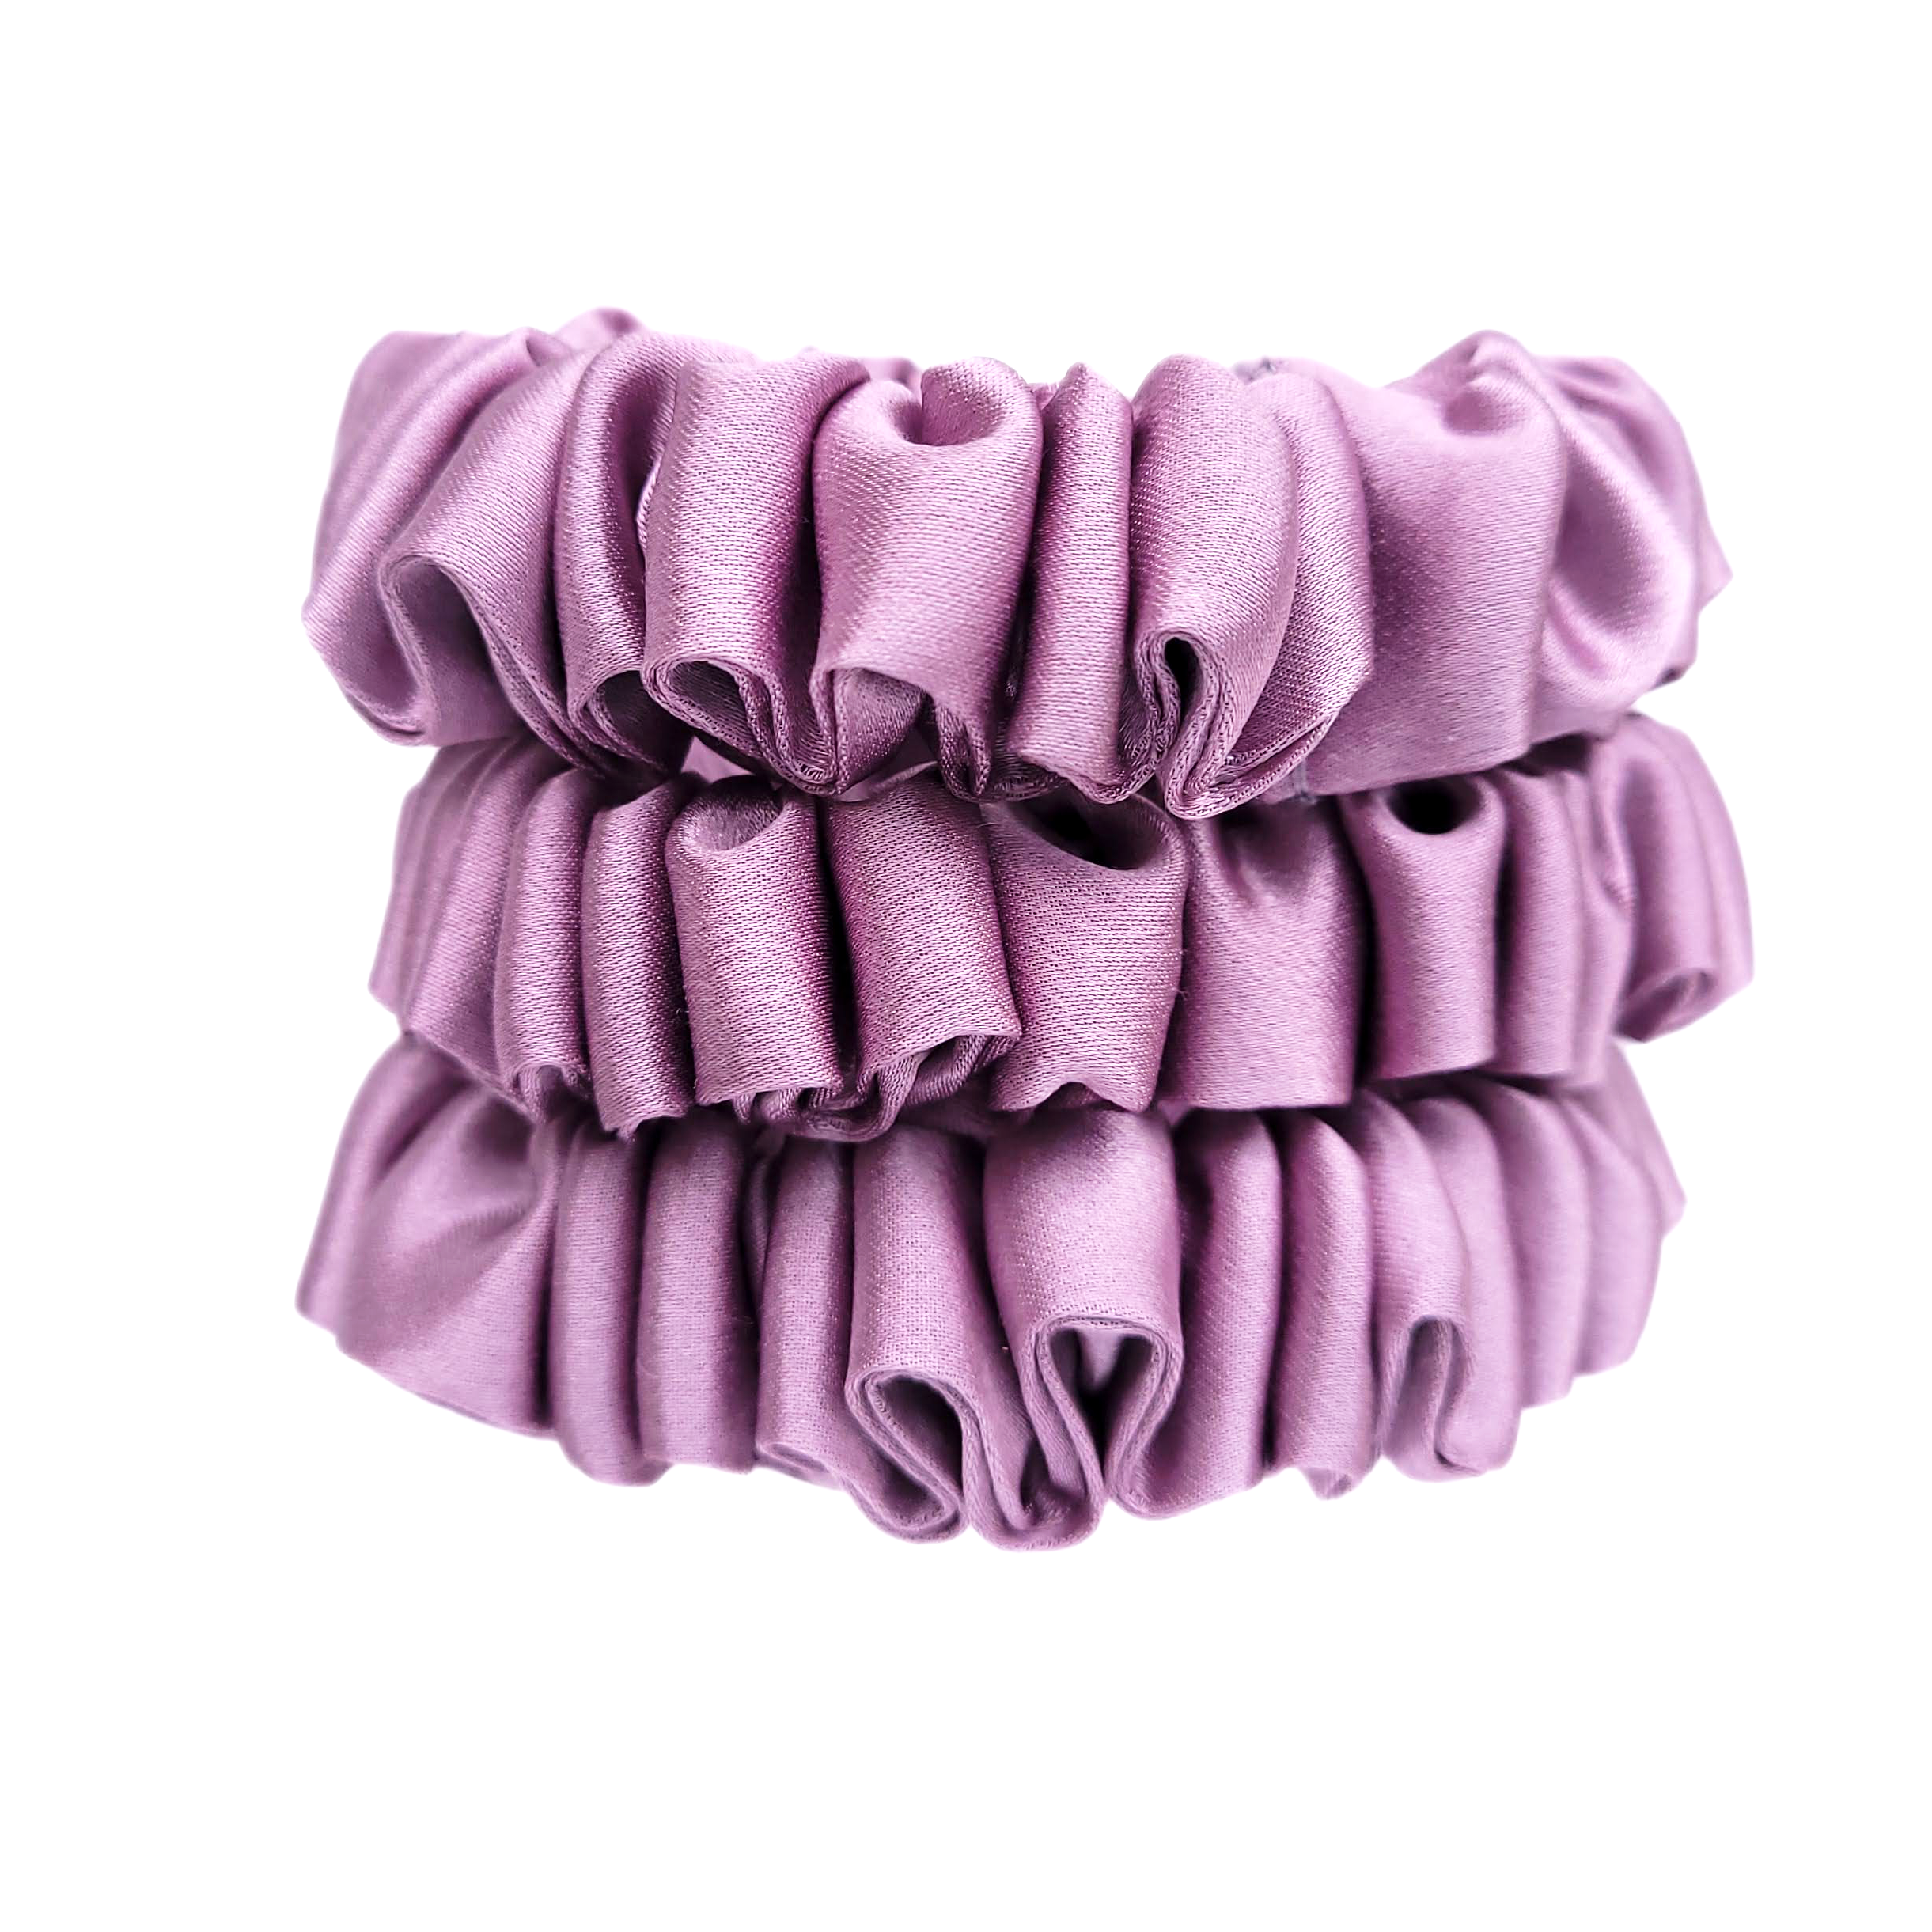 dusty rose mauve color silk scrunchies skinny size handmade in Canada by Lynne Kiel